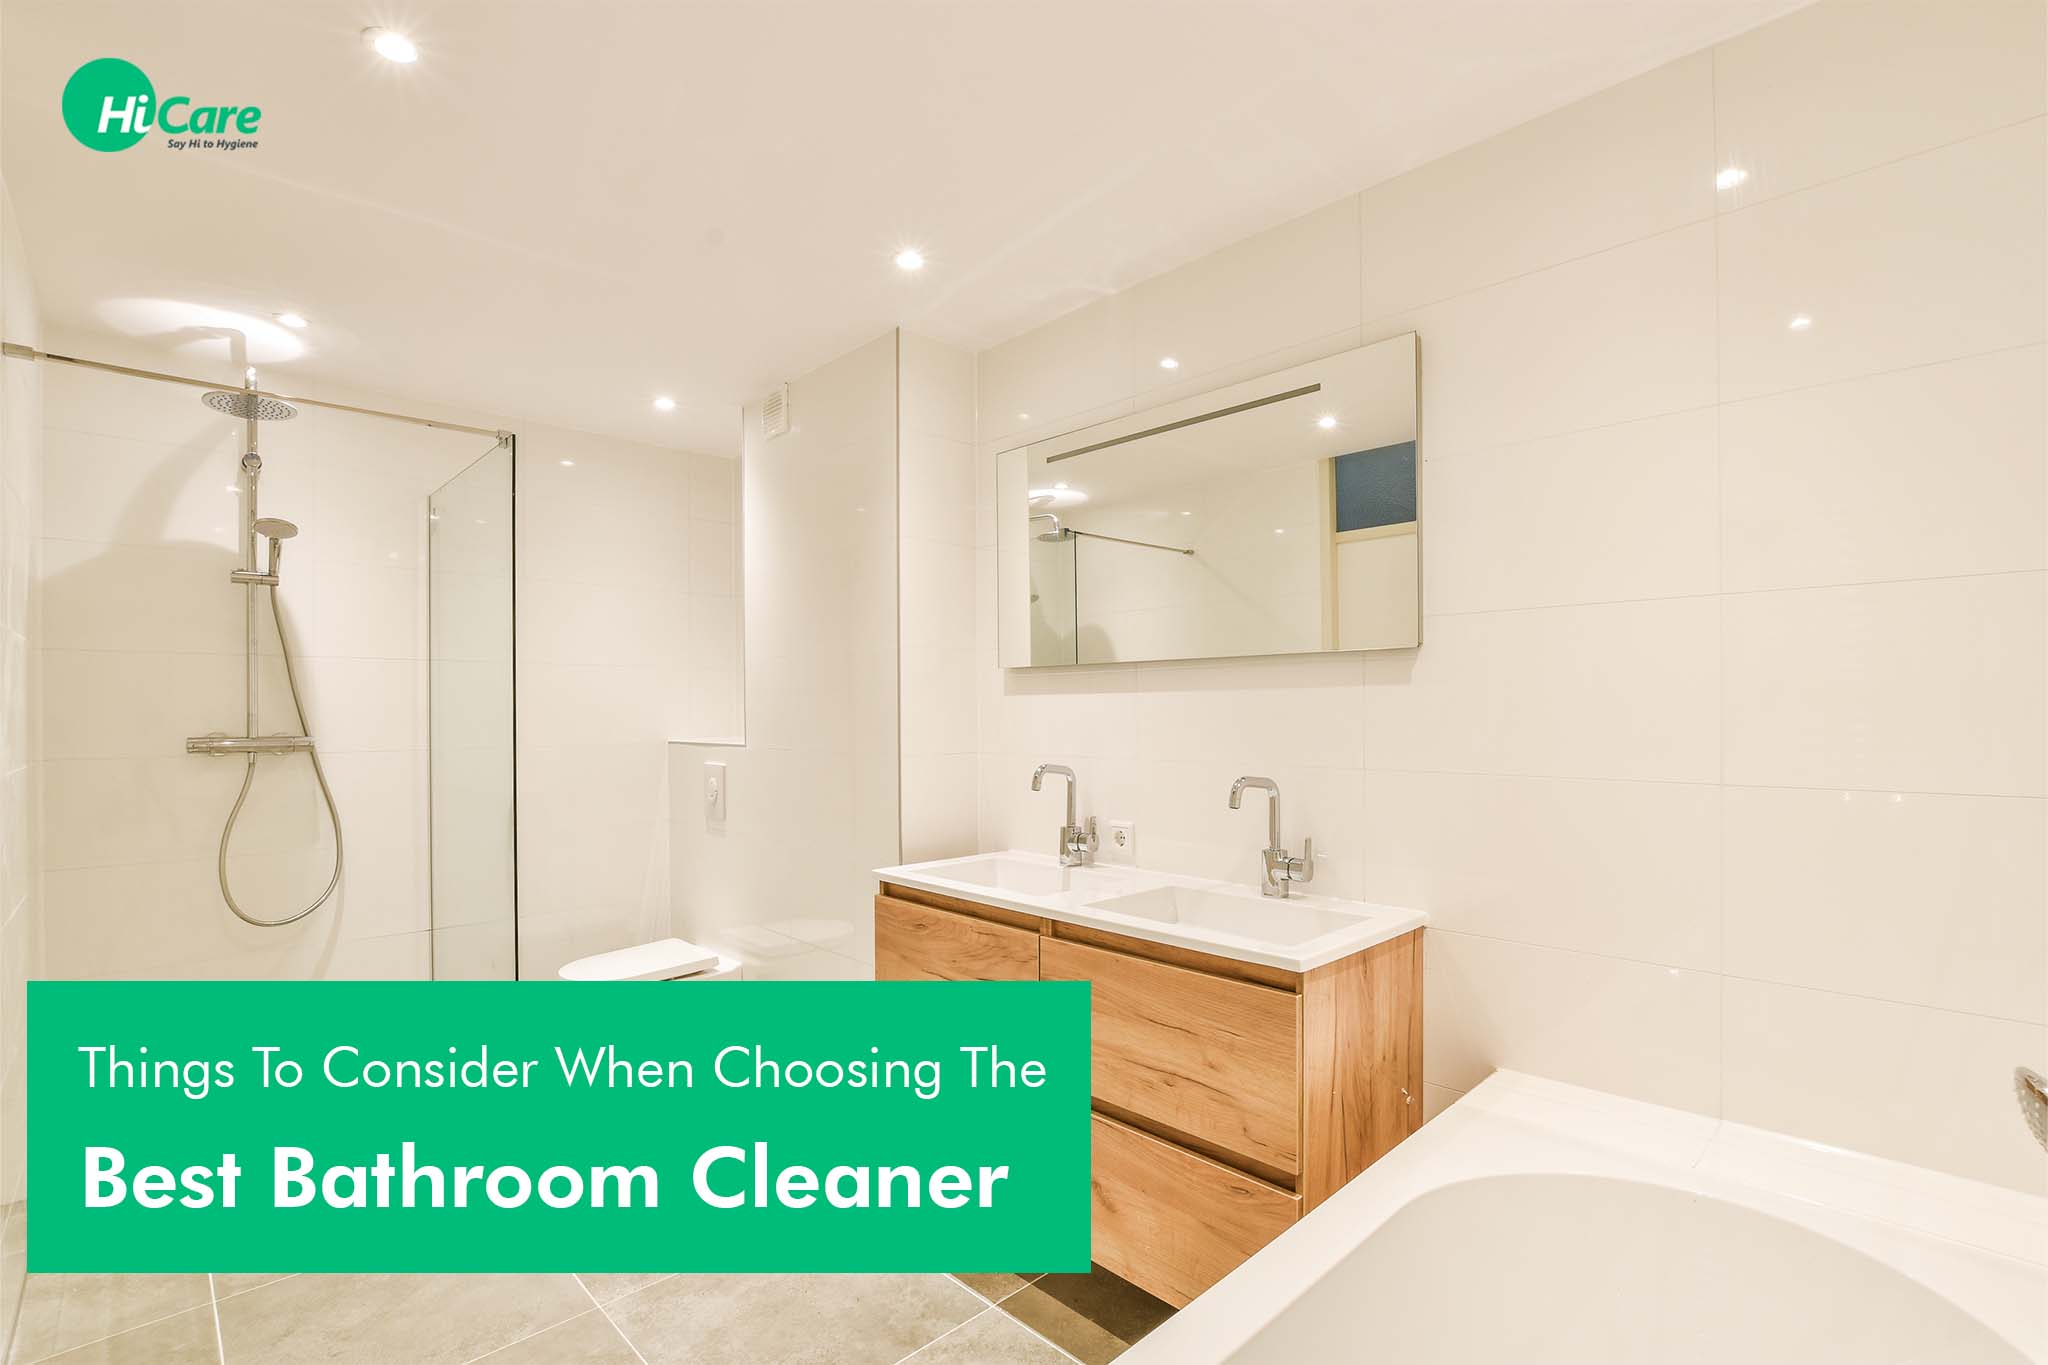 10 Things To Consider When Choosing The Best Bathroom Cleaner